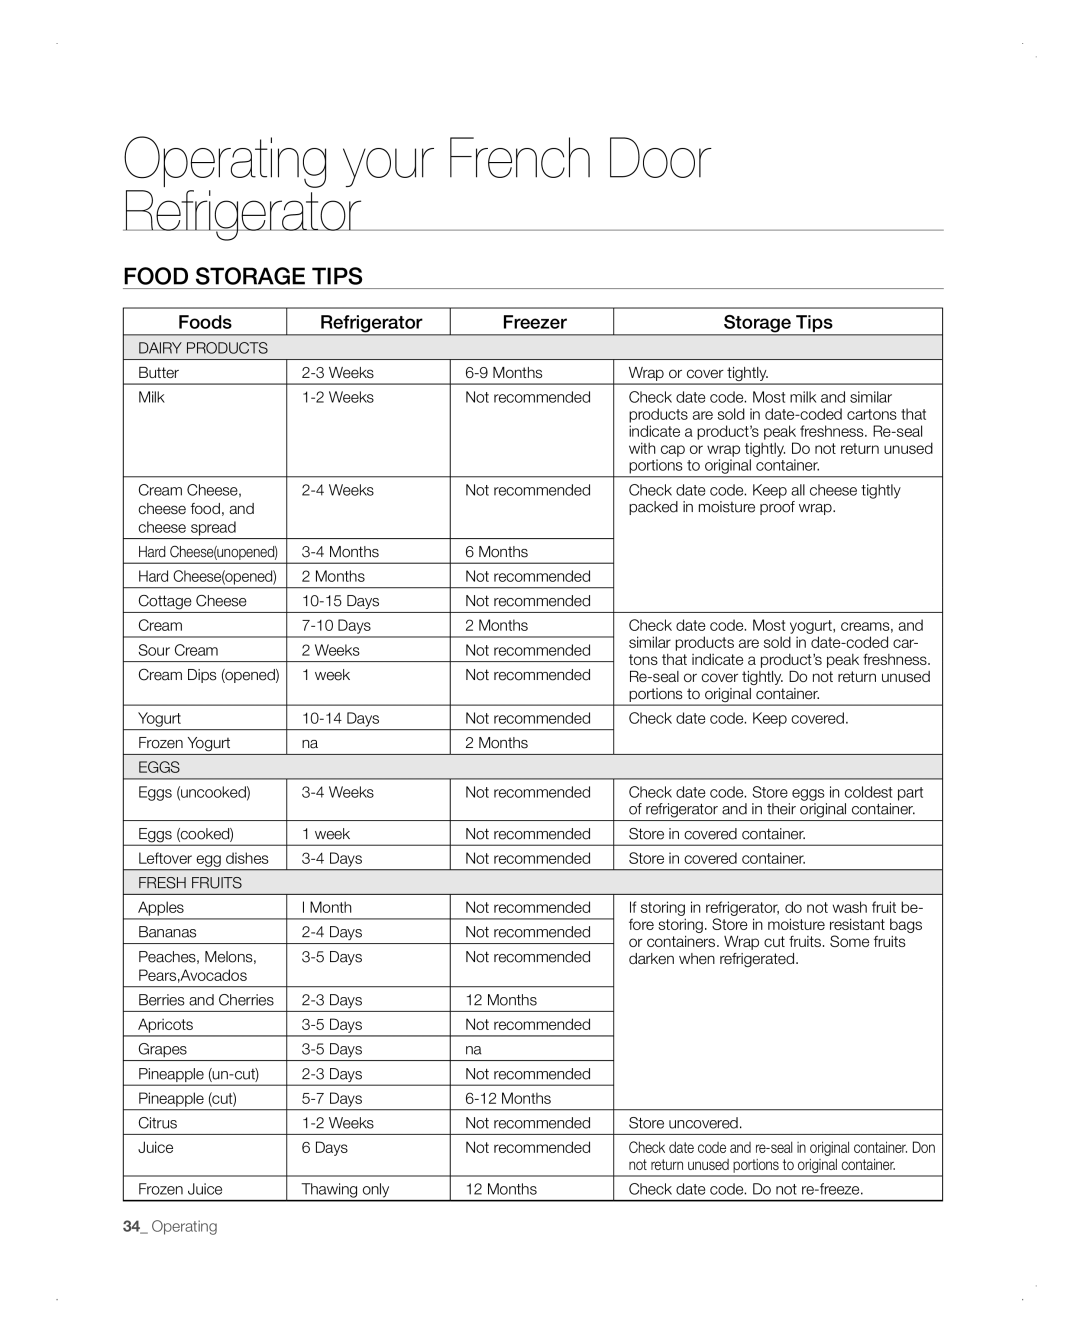 Samsung RFG298AARS user manual Food Storage Tips, Operating your French Door Refrigerator, Foods, Freezer 